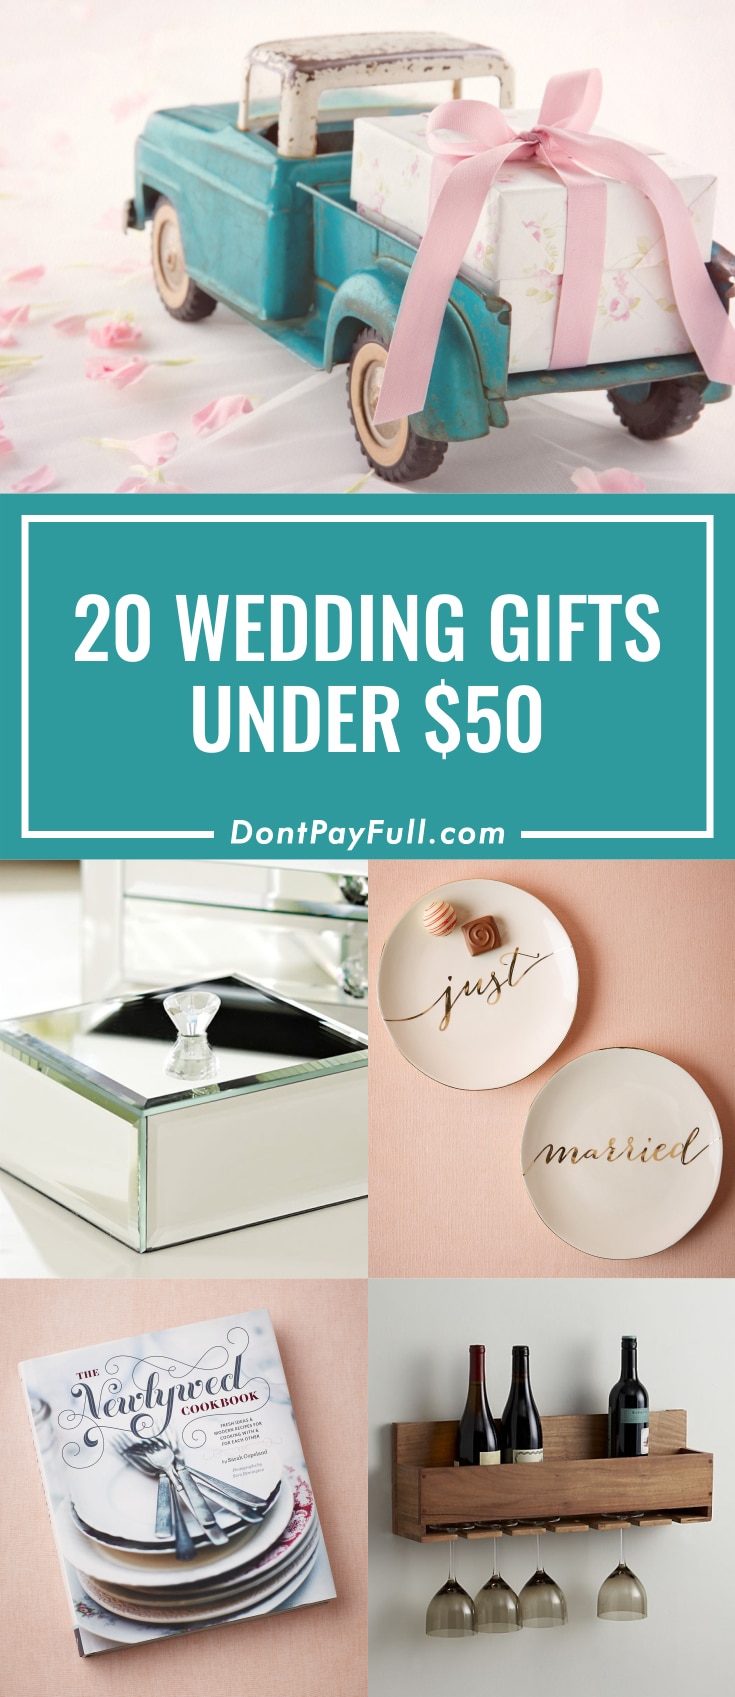 20 Wedding Gift Ideas for Under $50